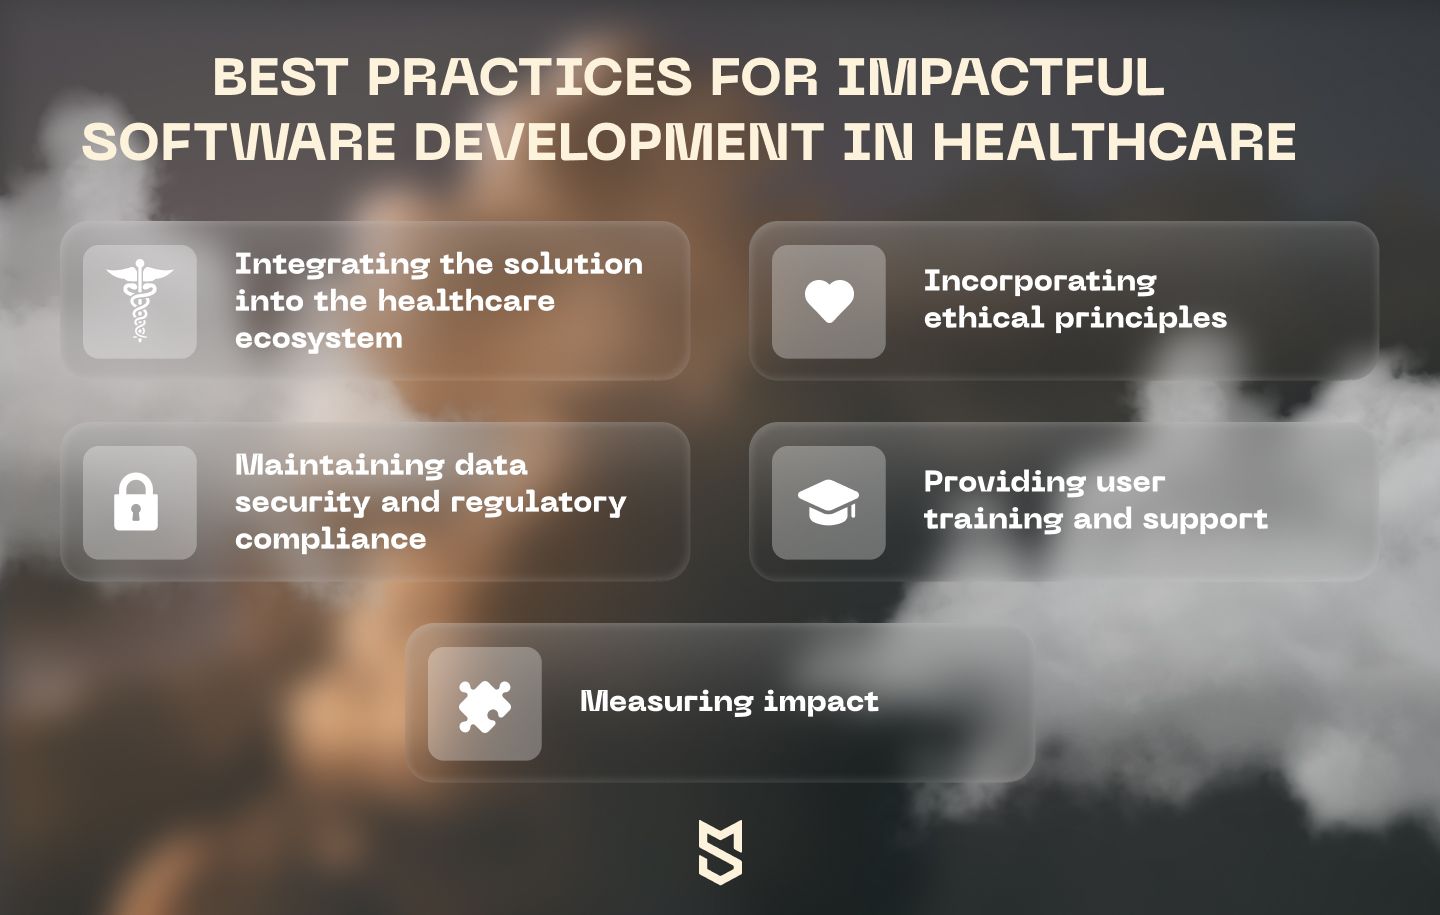 Best practices for impactful software development in healthcare